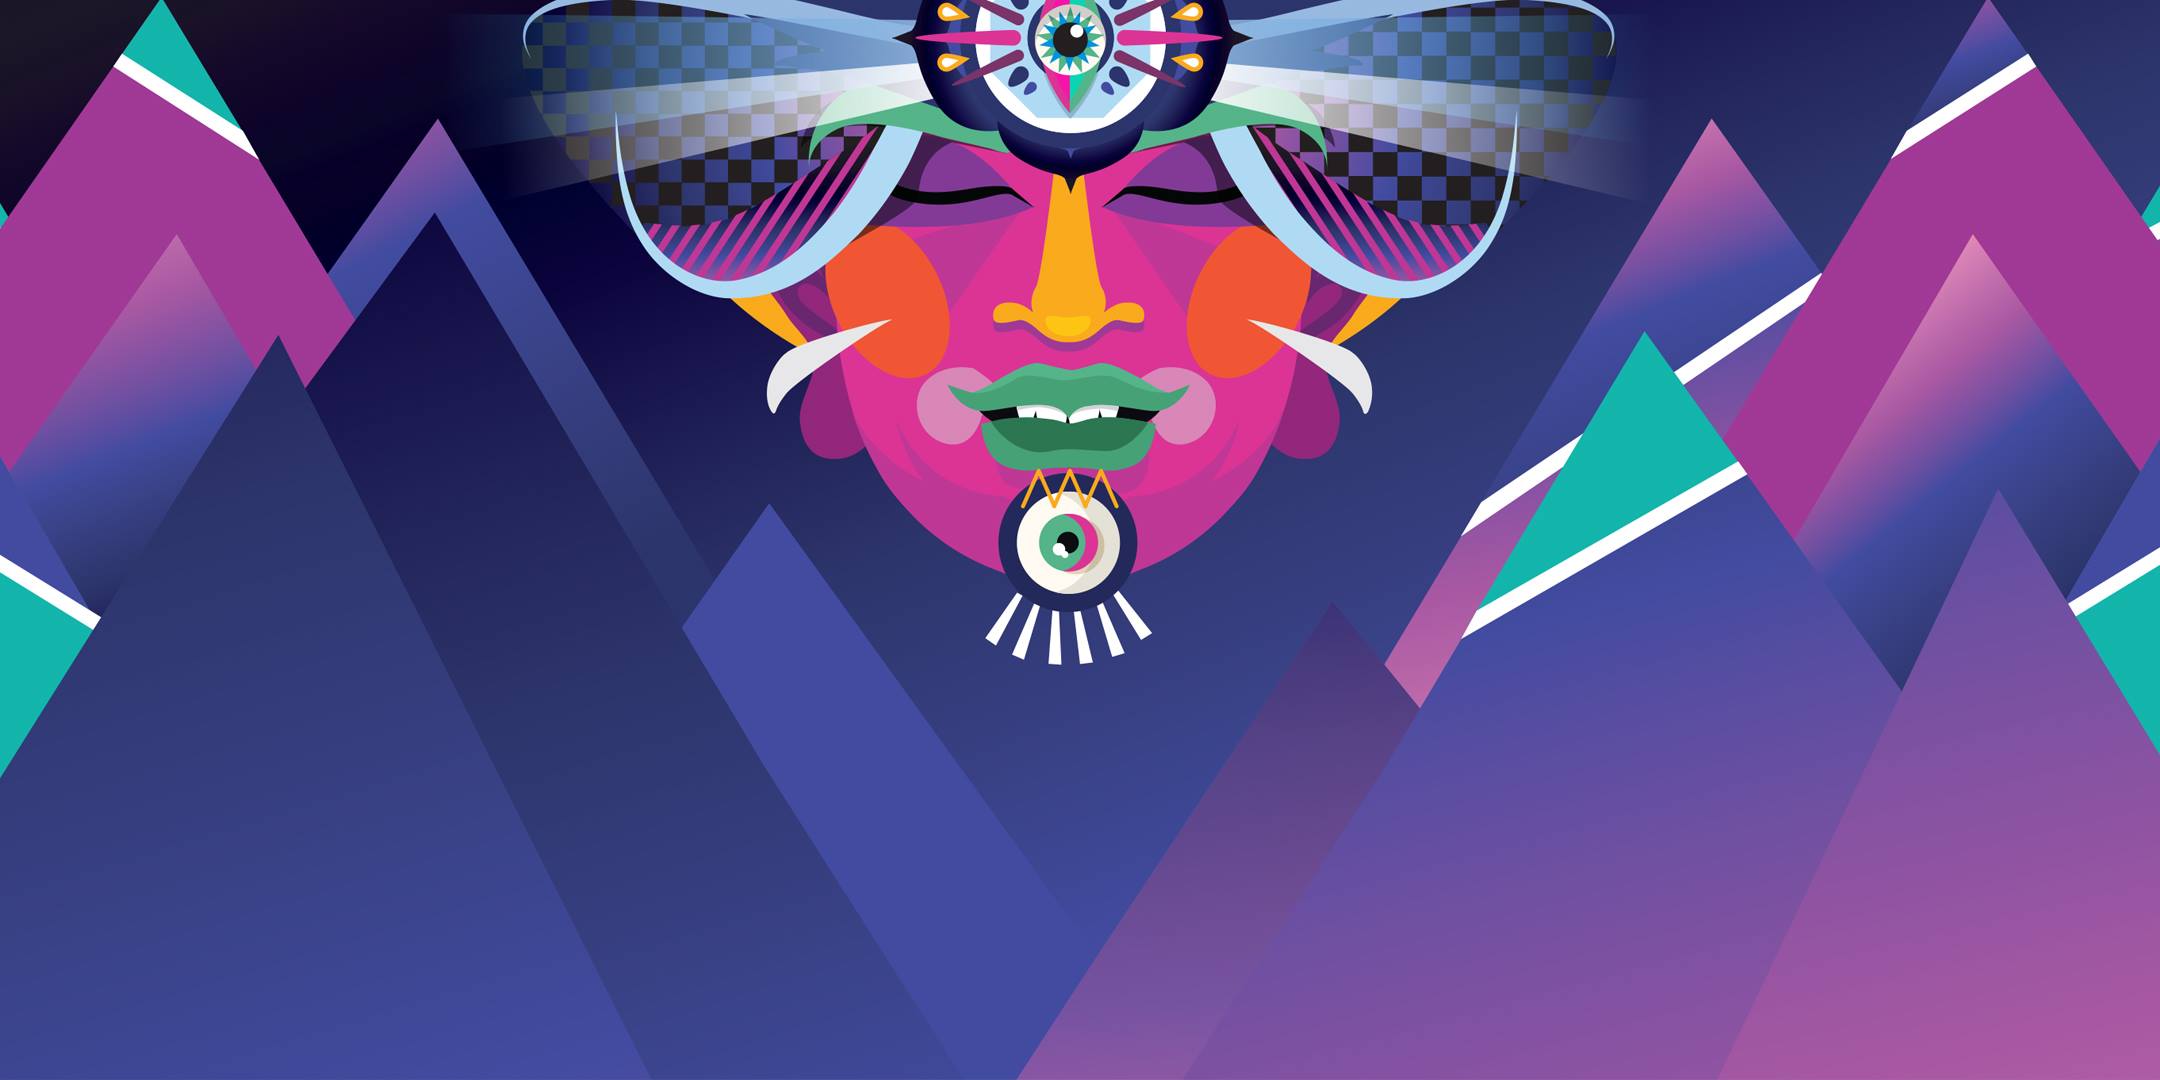 Rhythm and Alps Festival animated poster - Rhythm and Alps Festival 2018 - Lineupping